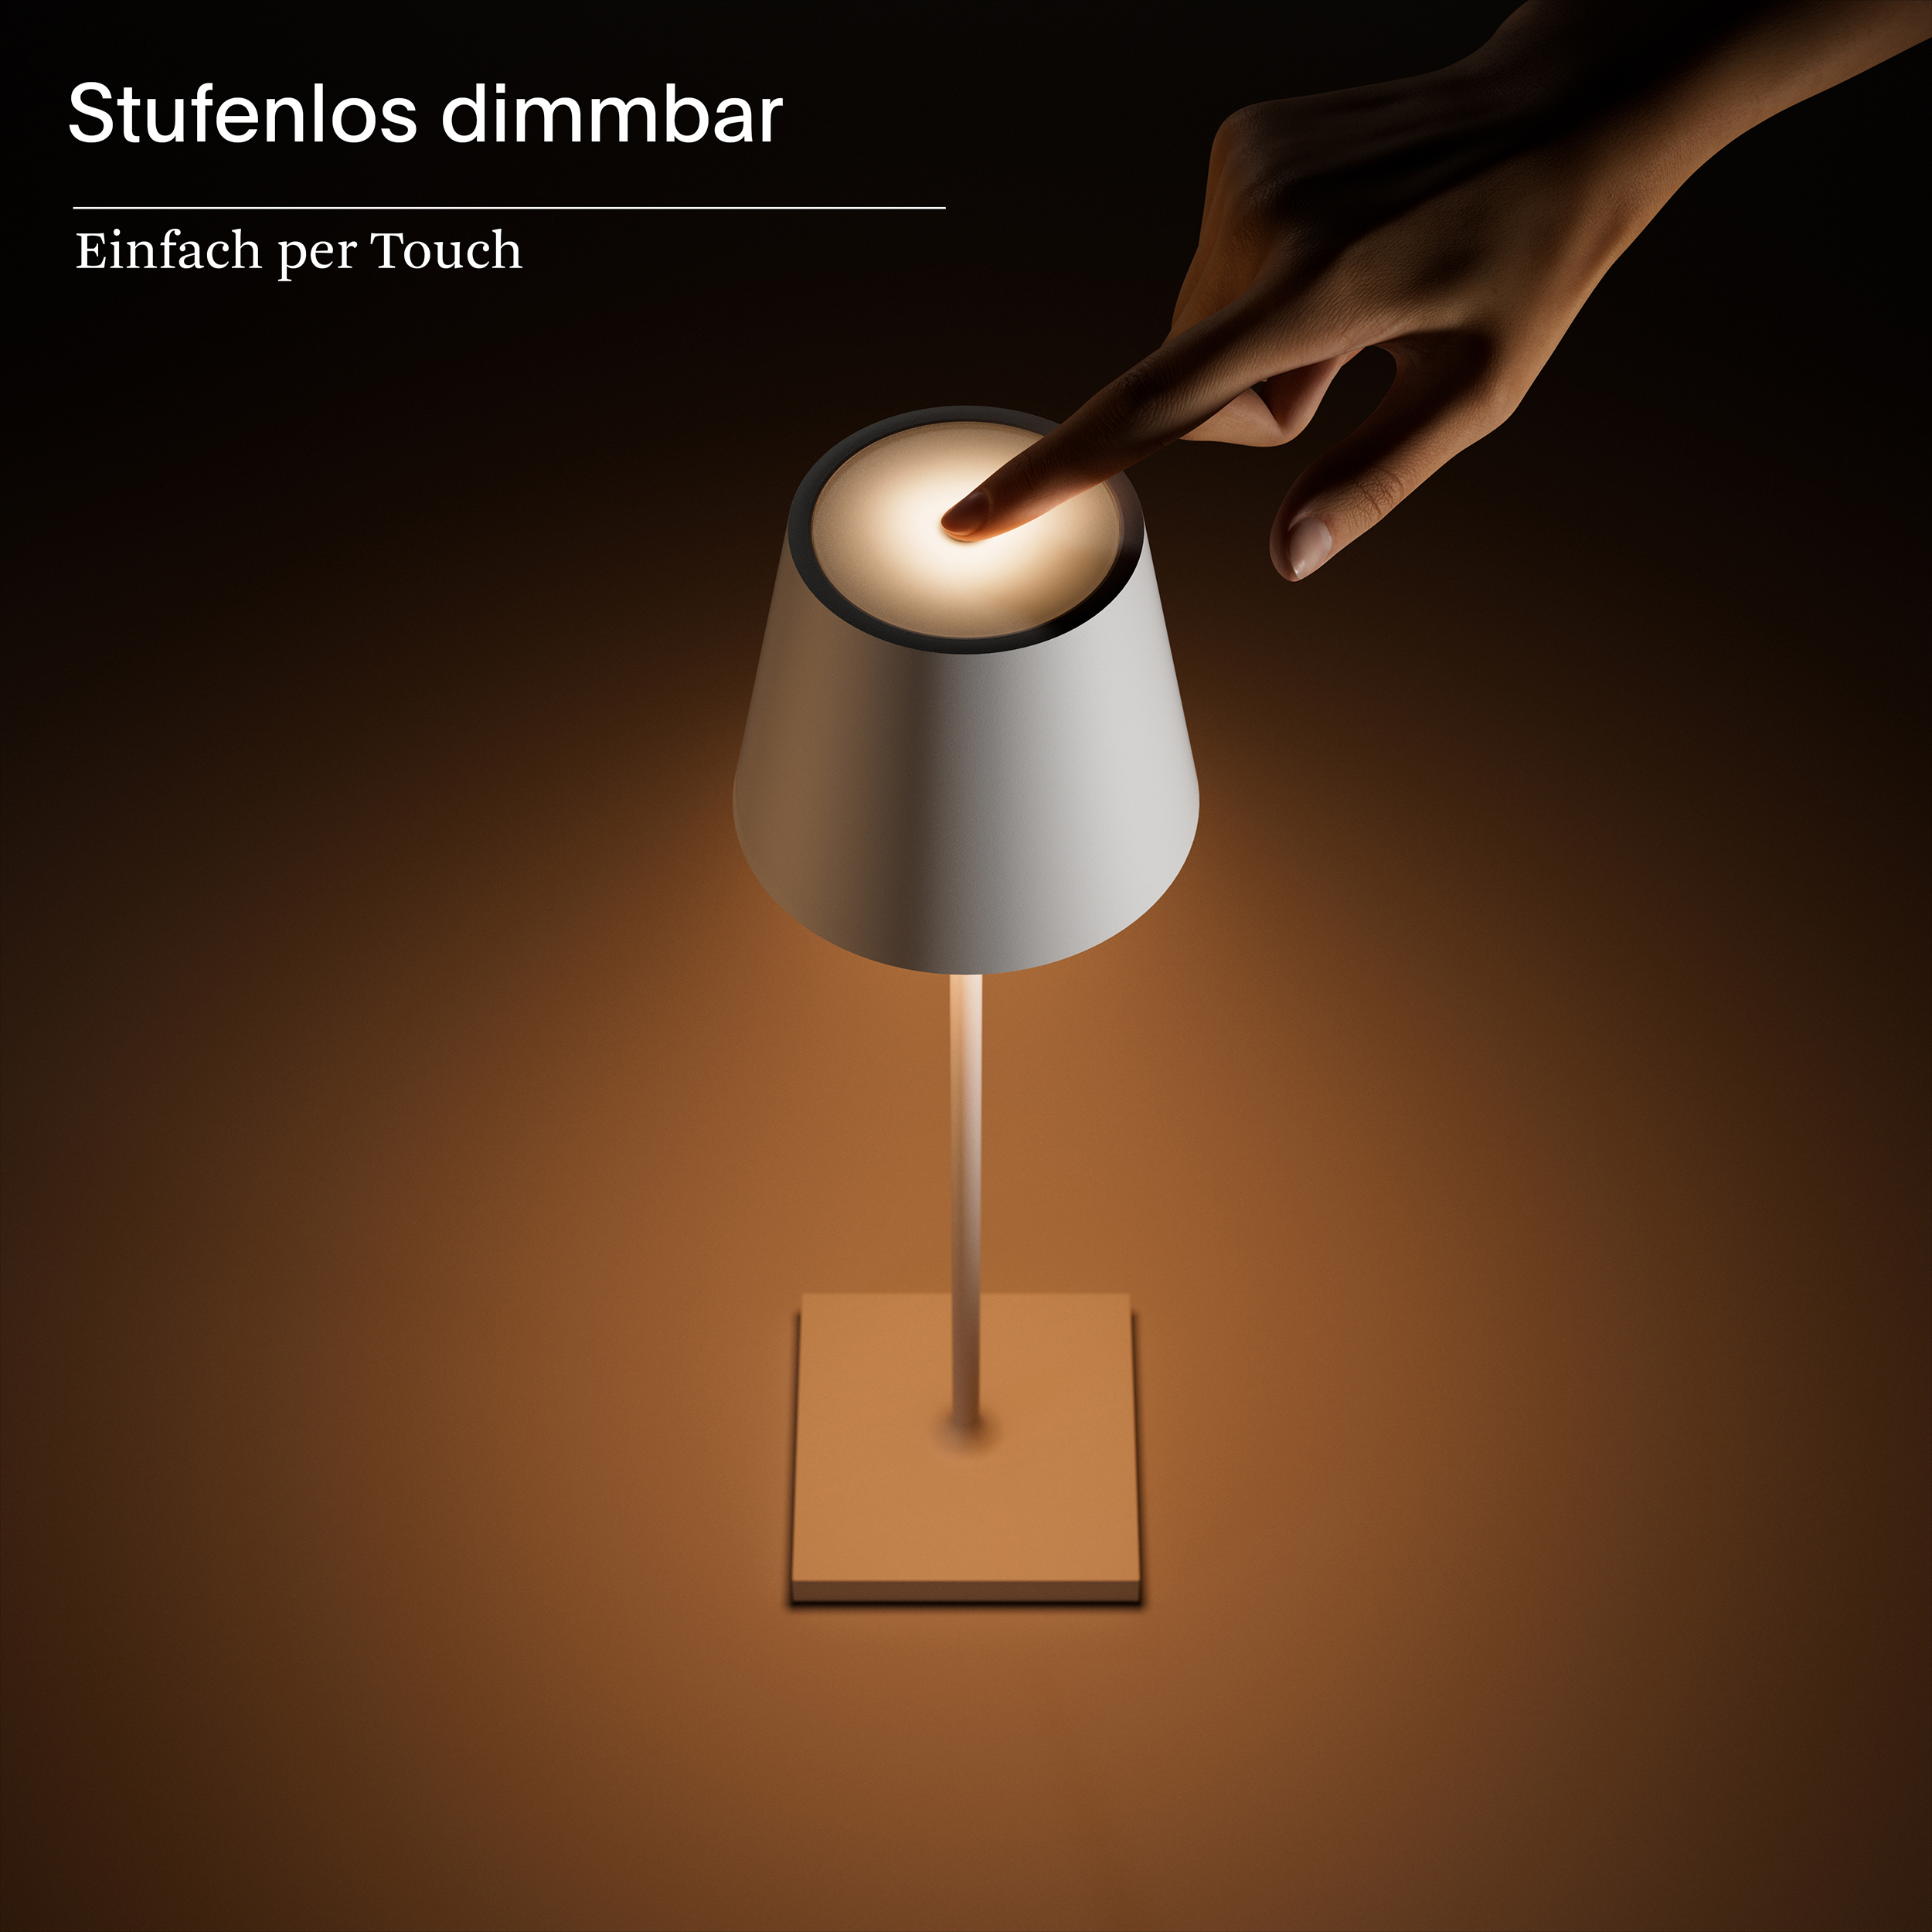 SIGOR NUINDIE Delfinblau LED Table Lamp warmweiss